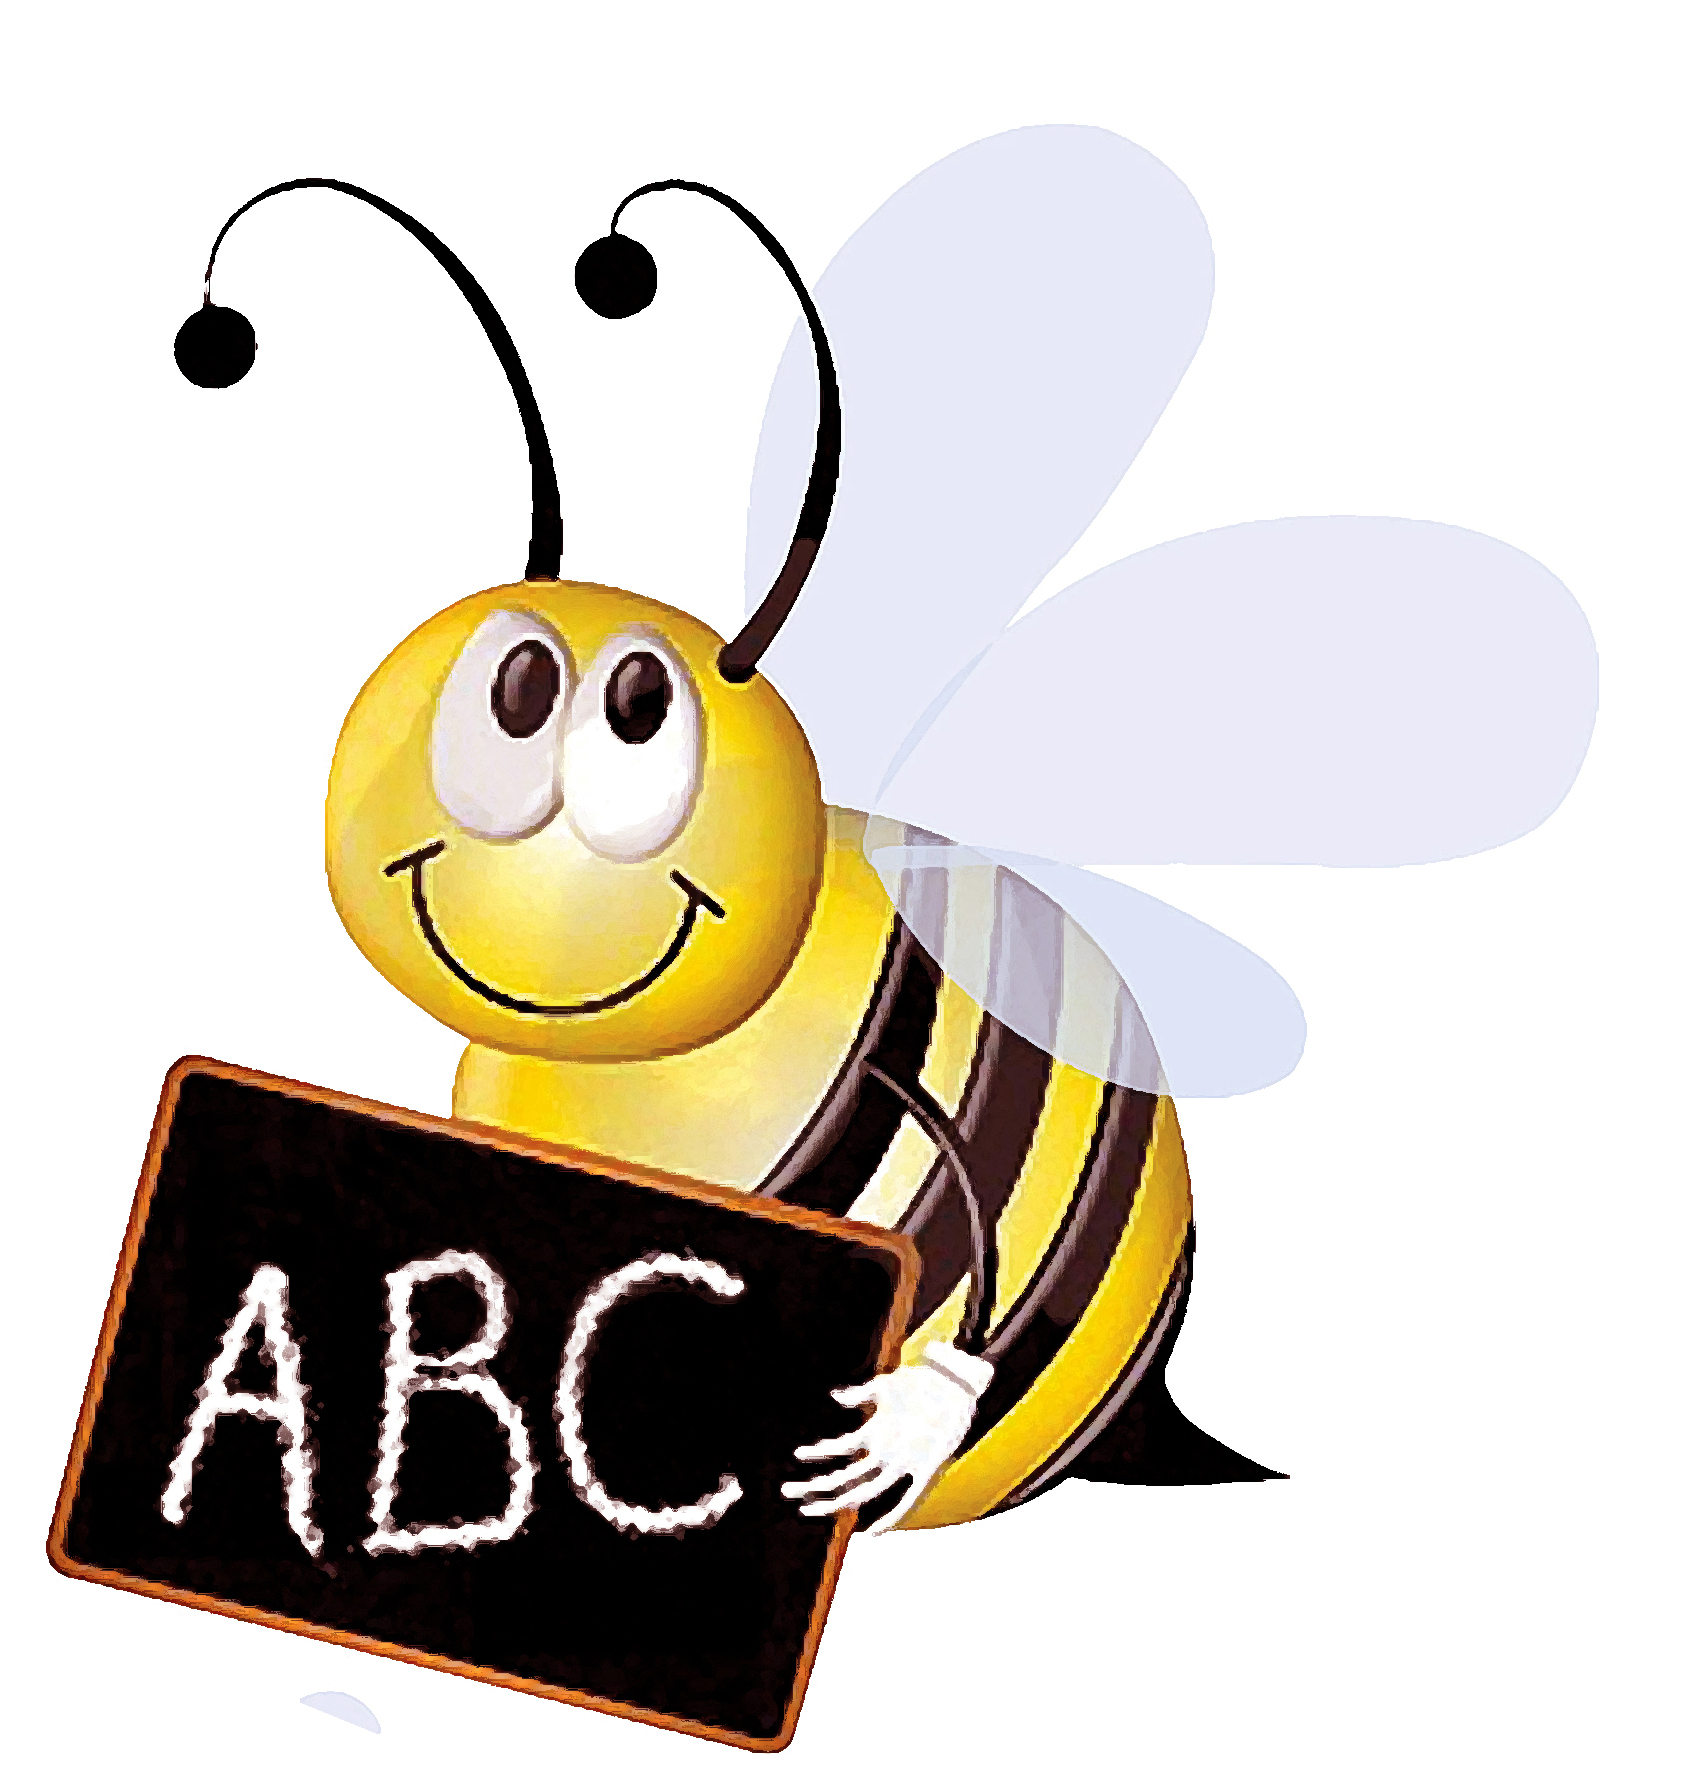 beehive clipart homework